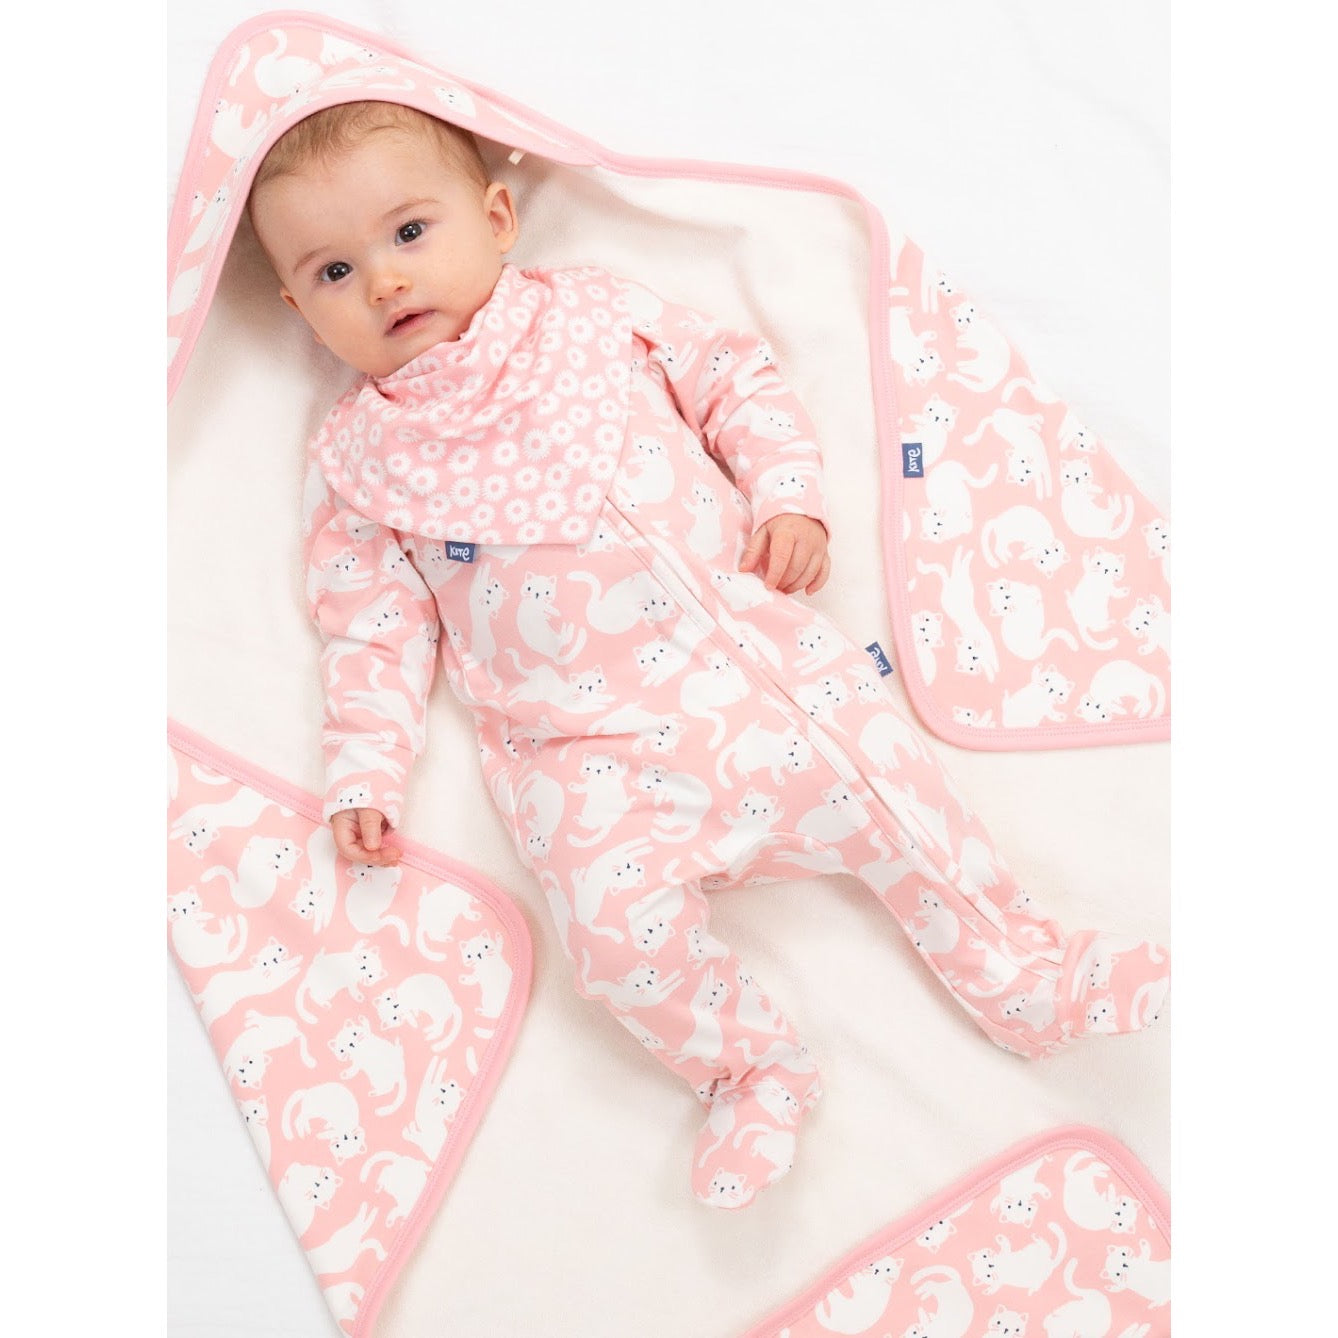 Kite Kitty Cat Sleepsuit 8102 Clothing NEWBORN / Pink,0-1M / Pink,0-3M / Pink,3-6M / Pink,6-9M / Pink